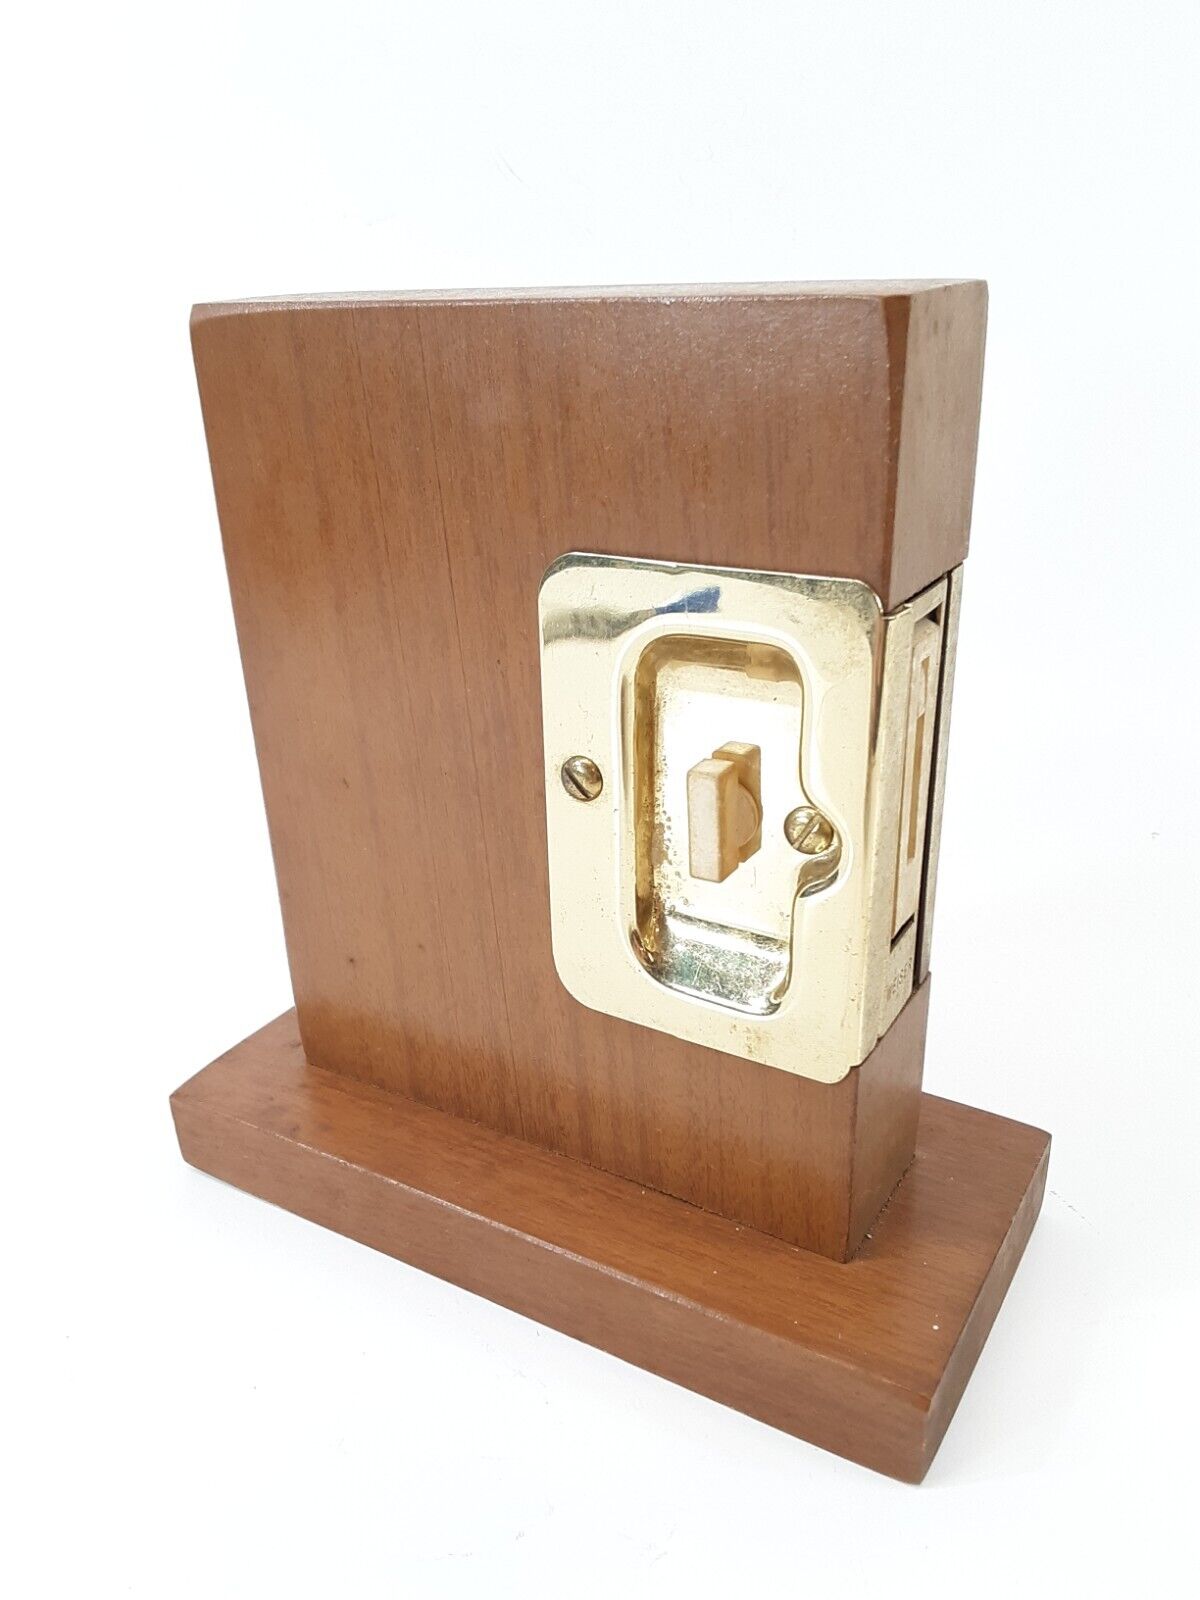 WEISER LOCKS Deadbolt Lock Salesman Sample Advertising Display Vintage RARE